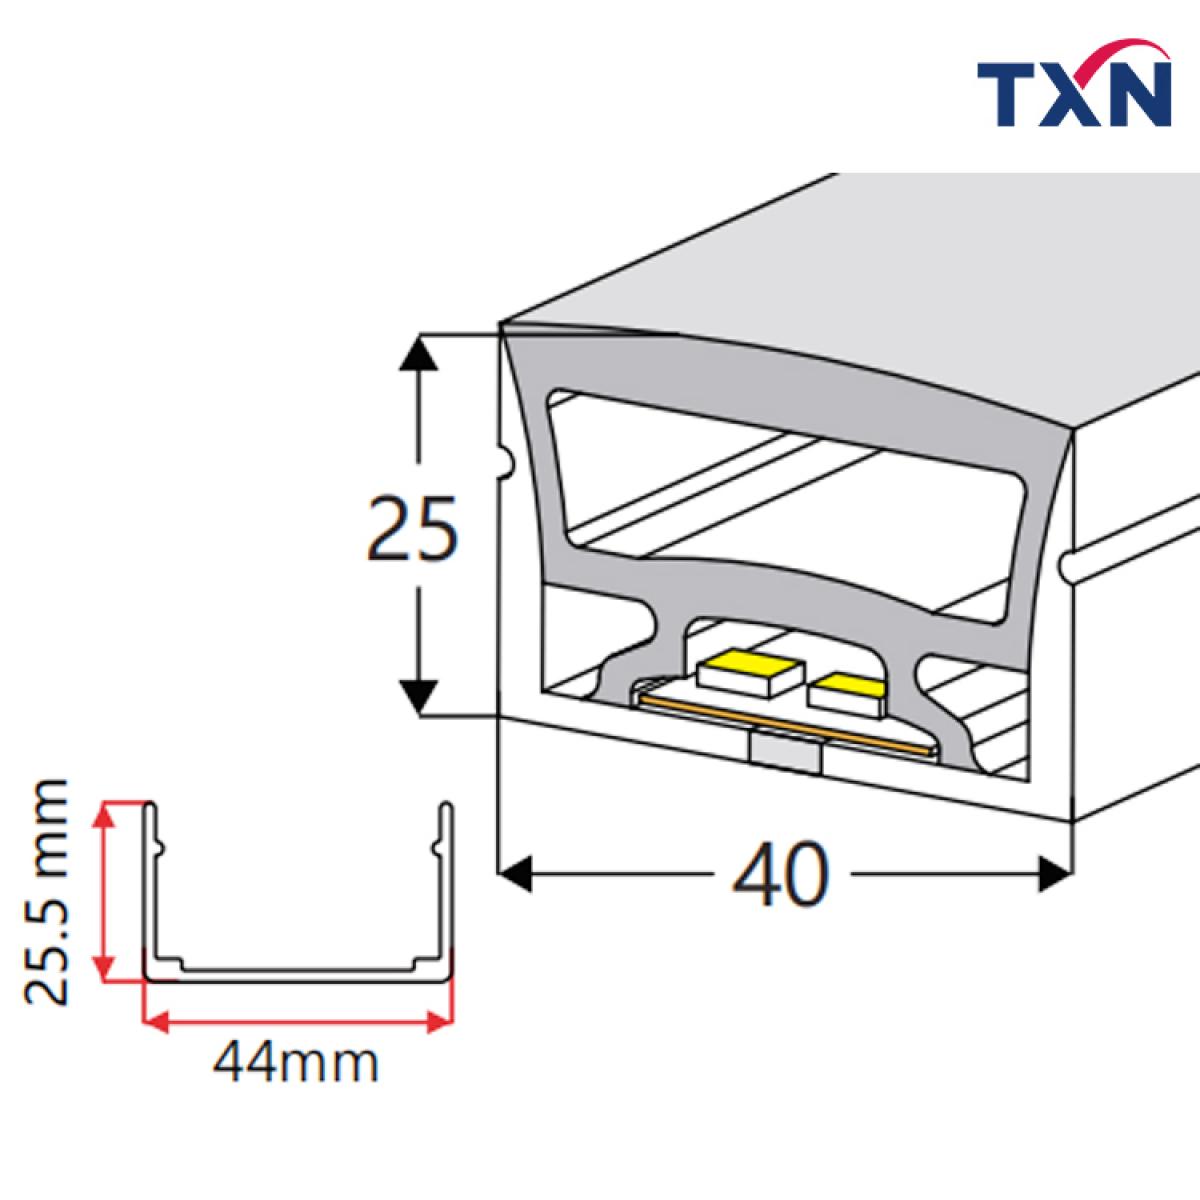 TXN-4025 20MM Wide Silicone Flexible Neon Tubing